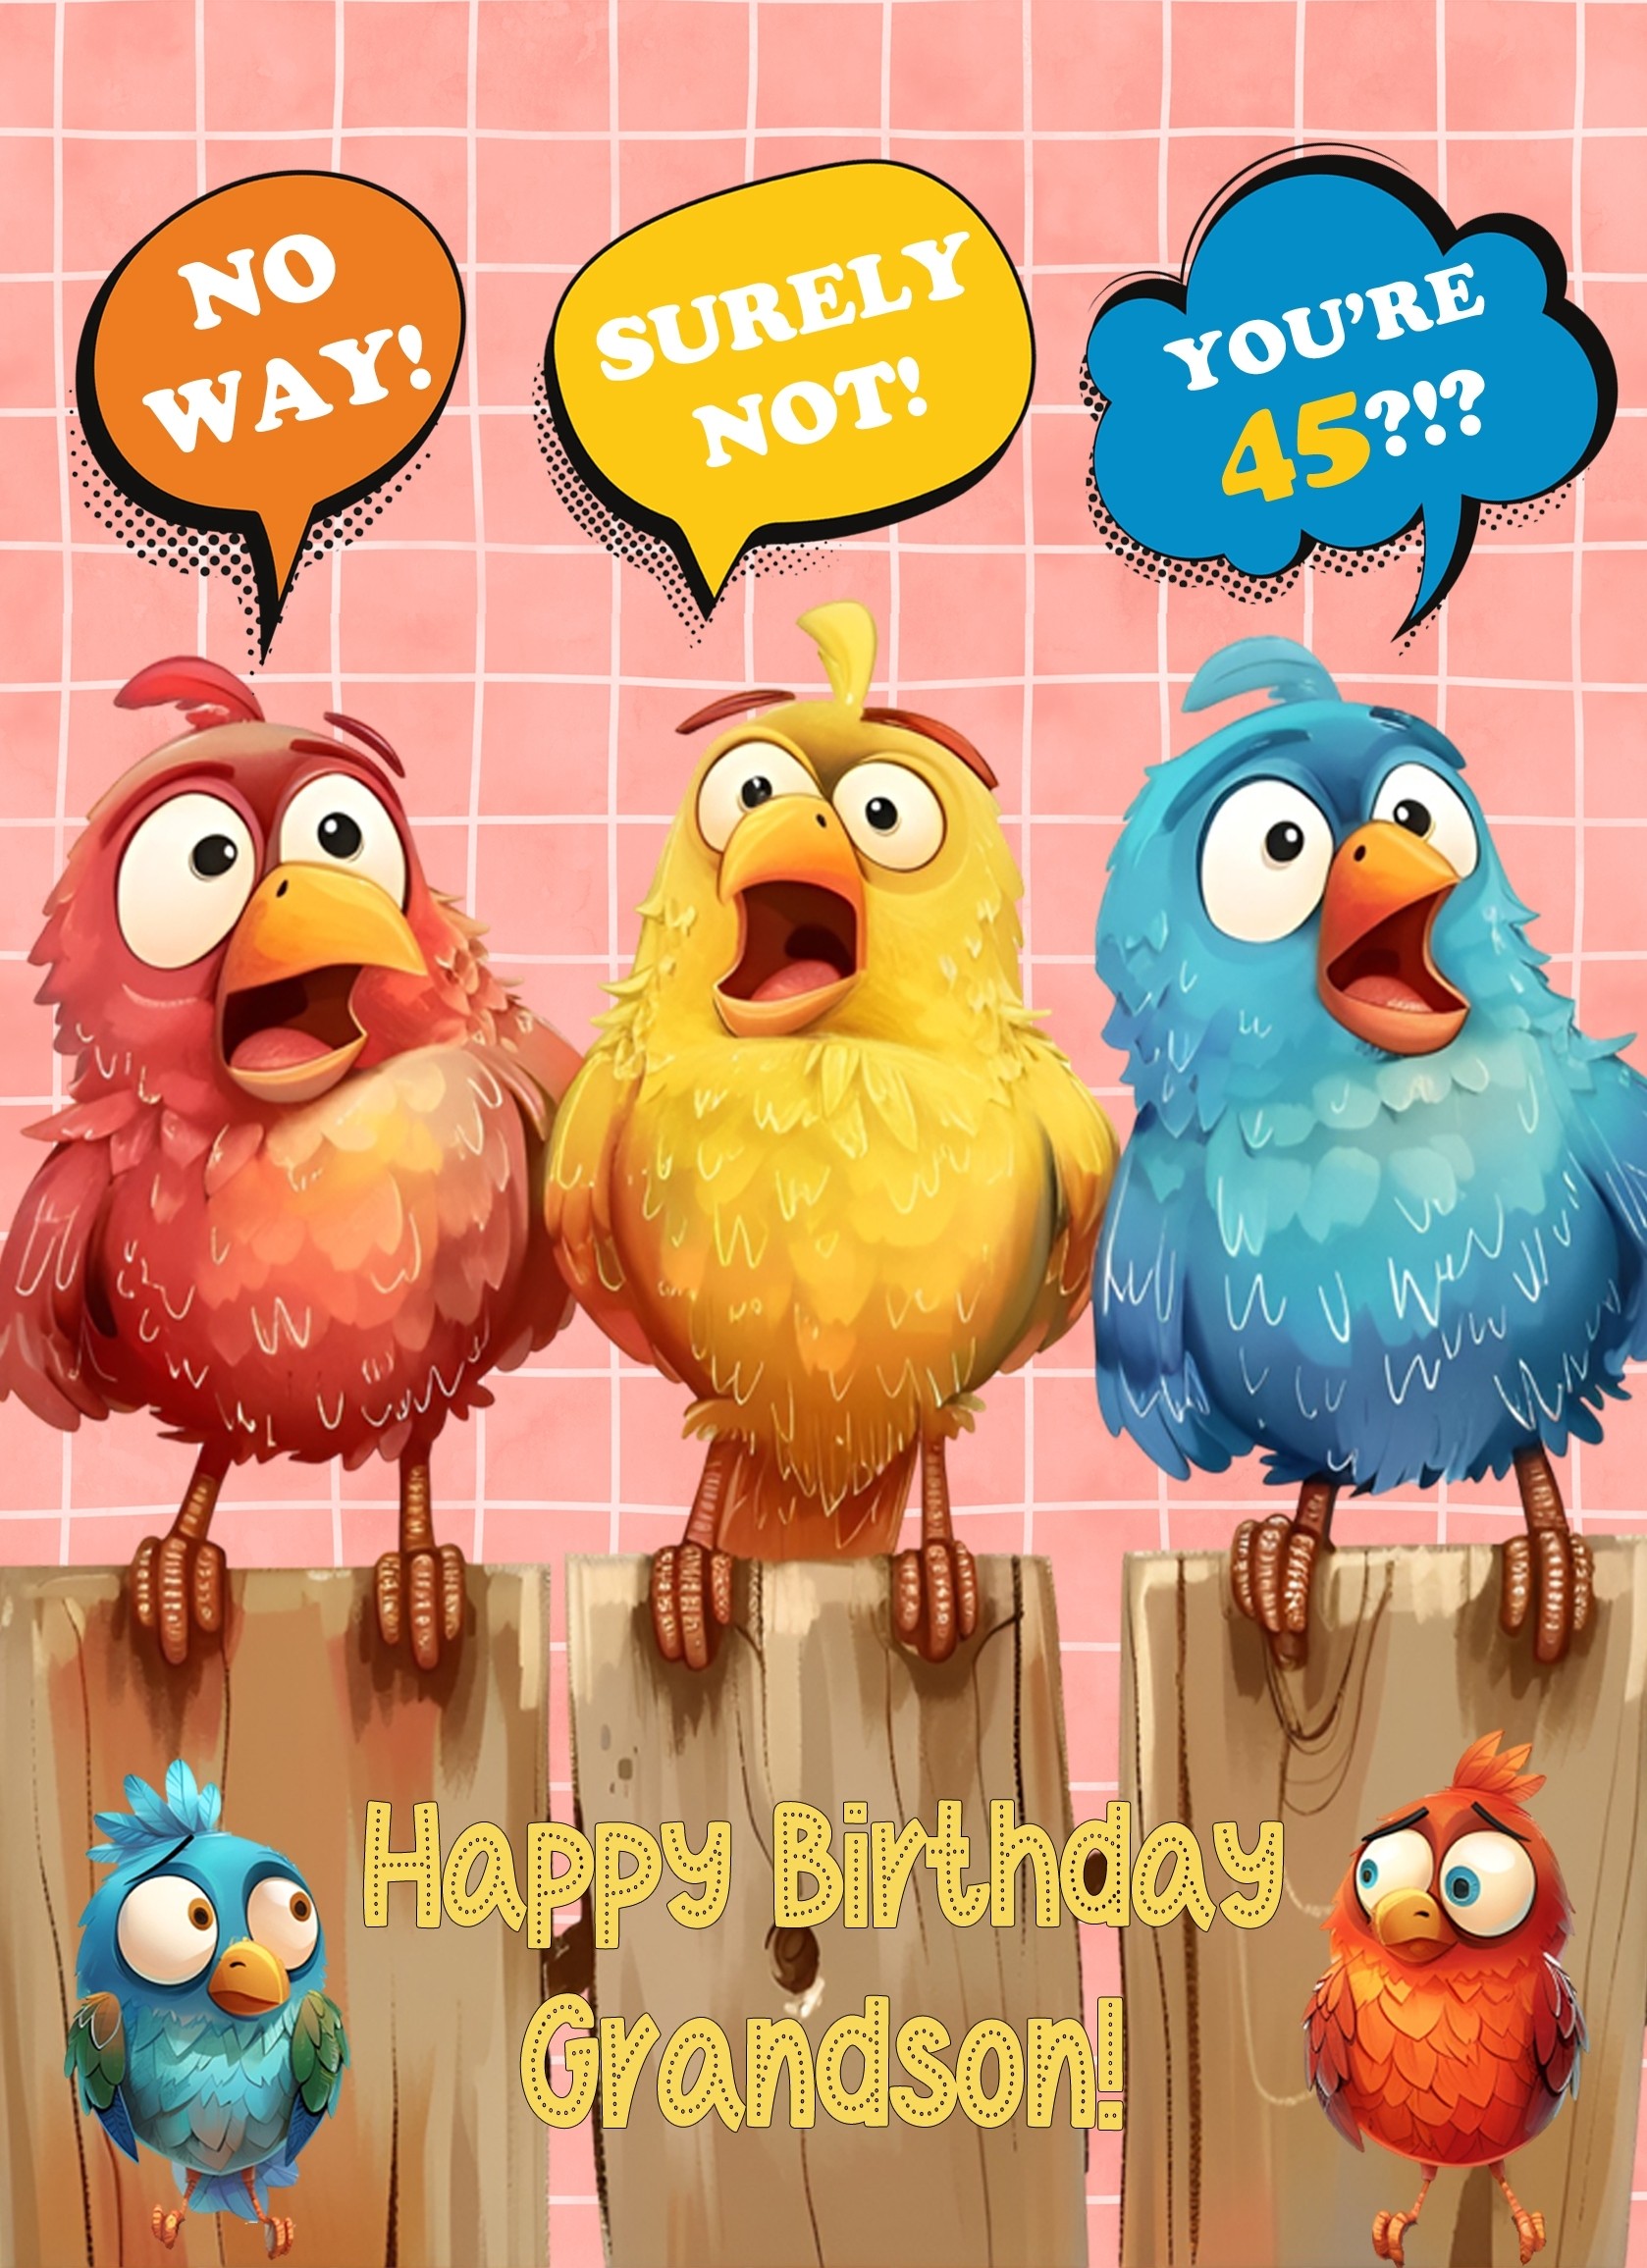 Grandson 45th Birthday Card (Funny Birds Surprised)